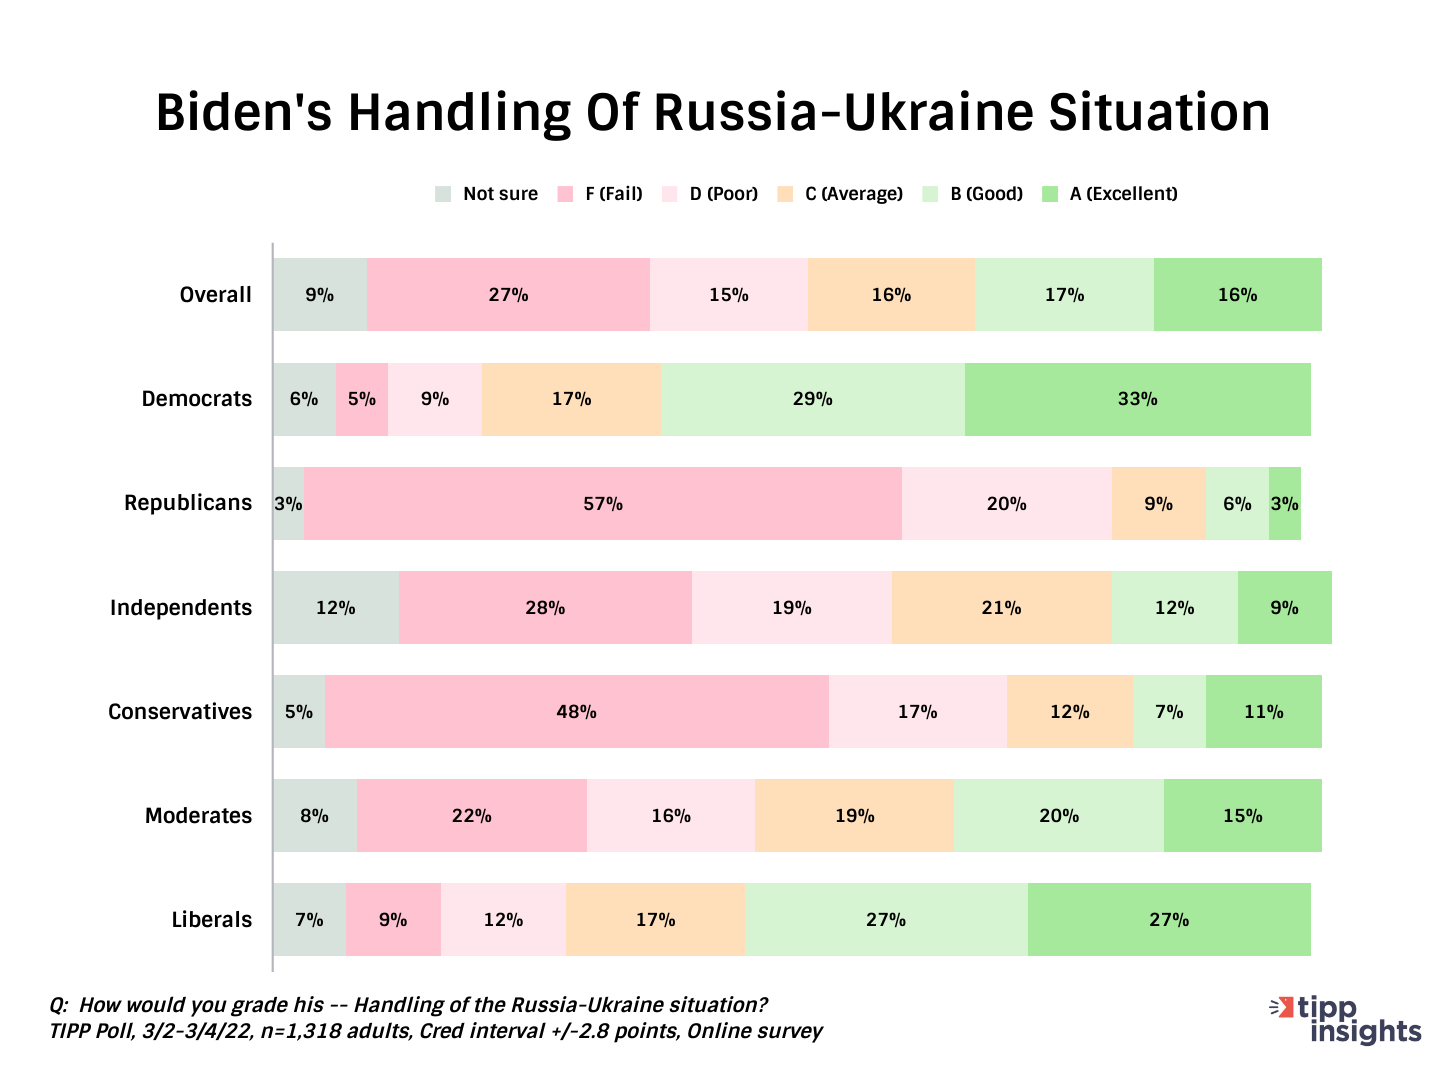 Handling of Russia-Ukraine Situation